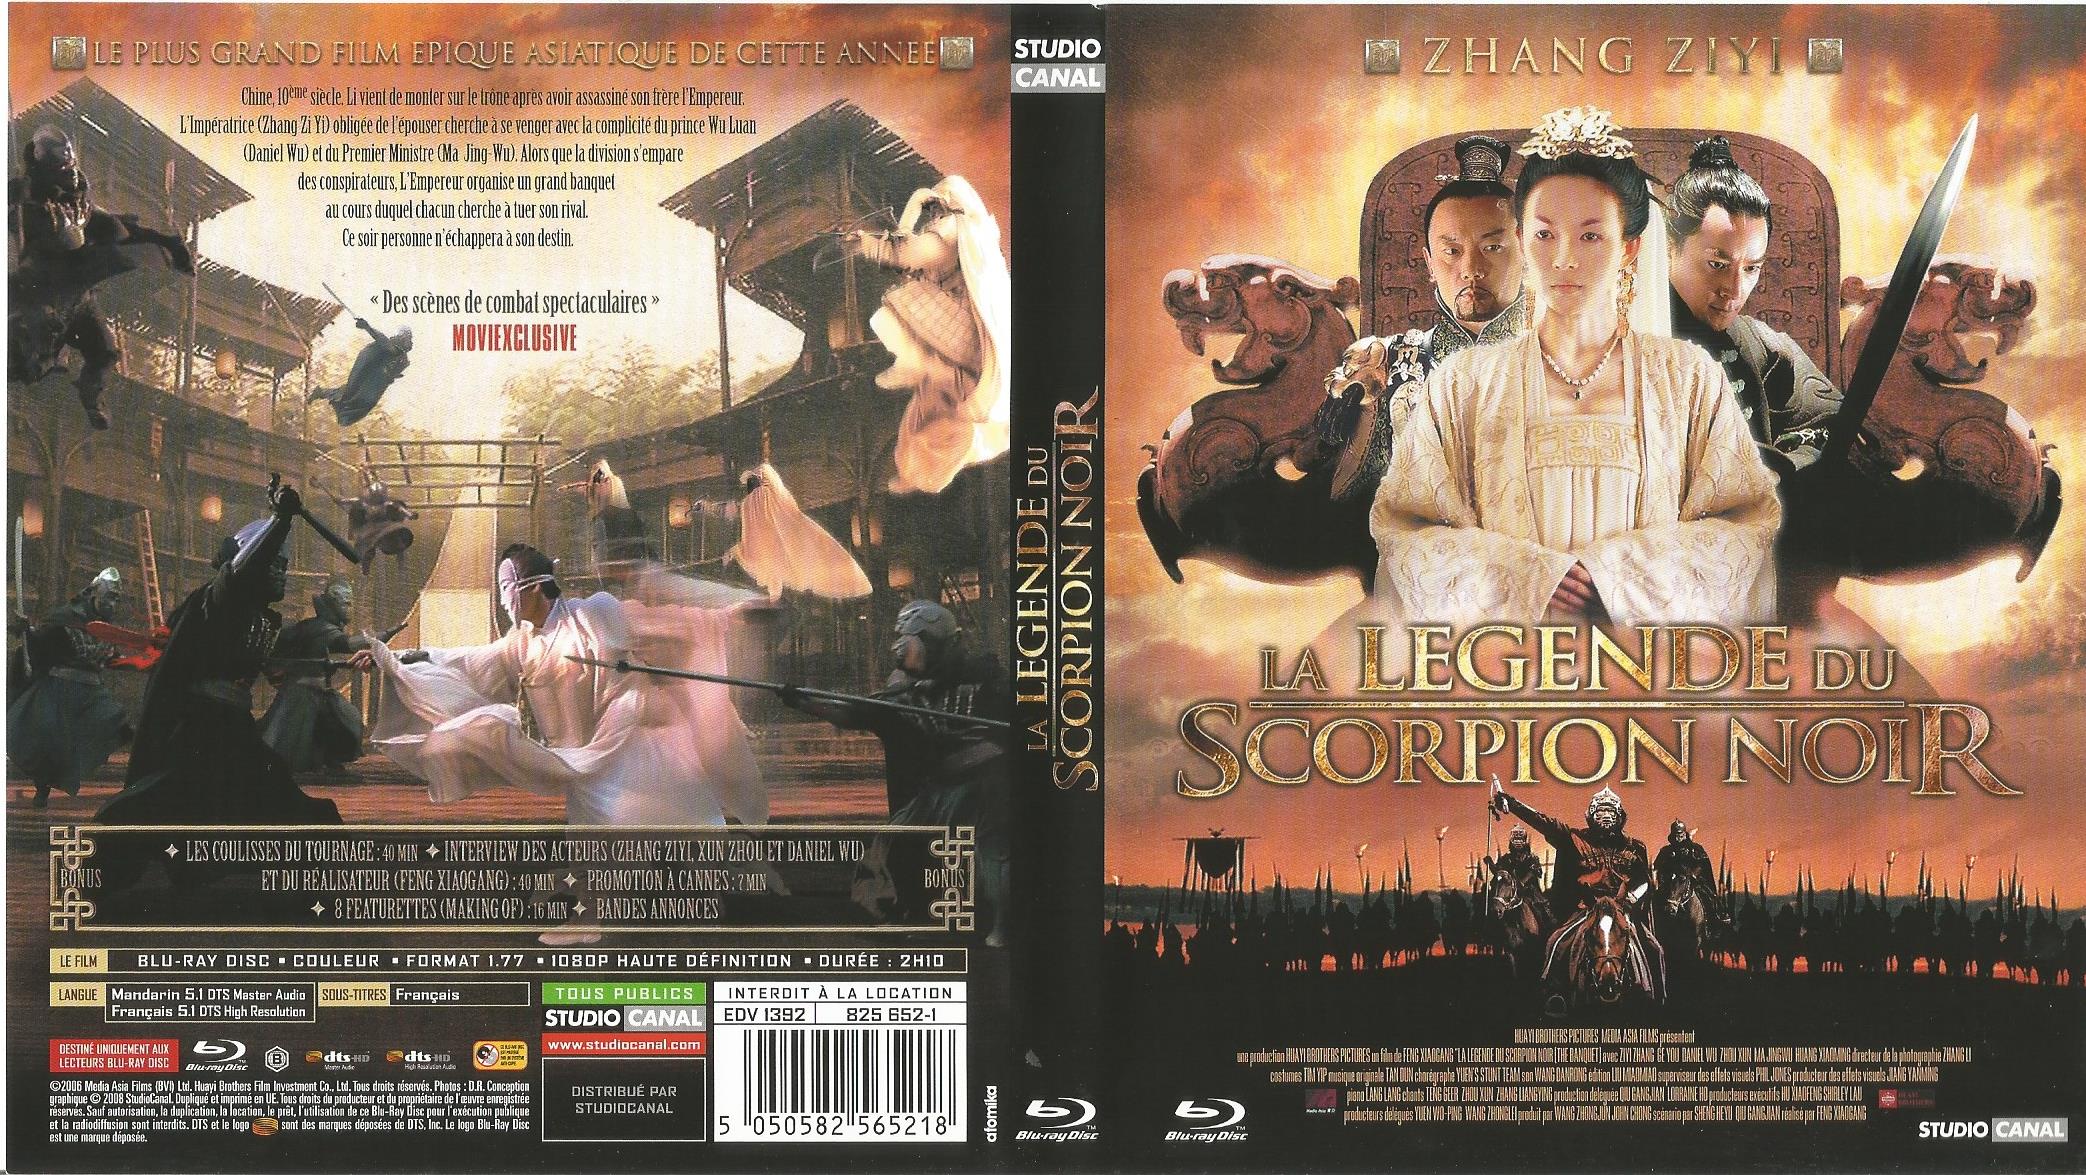 Jaquette DVD La lgende du scorpion noir (BLU-RAY)